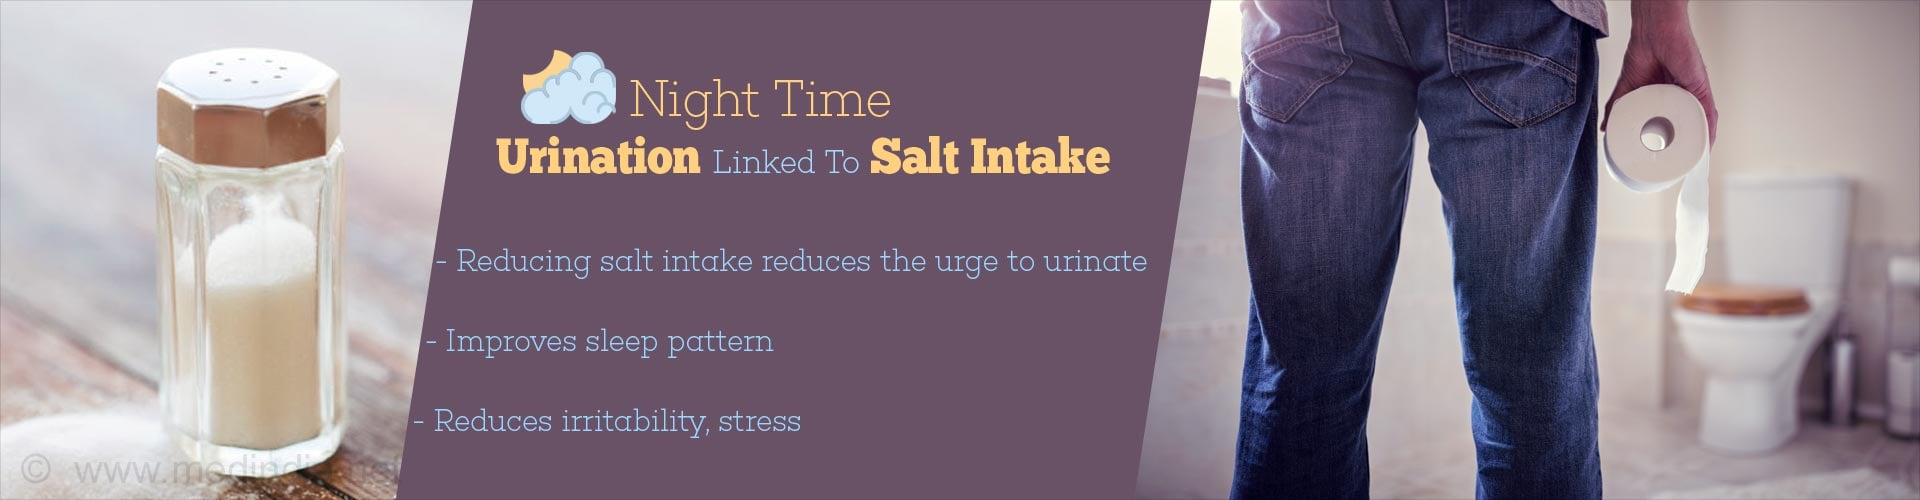 night time urination linked to salt intake
- reducing salt intake reduces the urge to urinate
- improves sleep pattern
- reduces irritability, stress